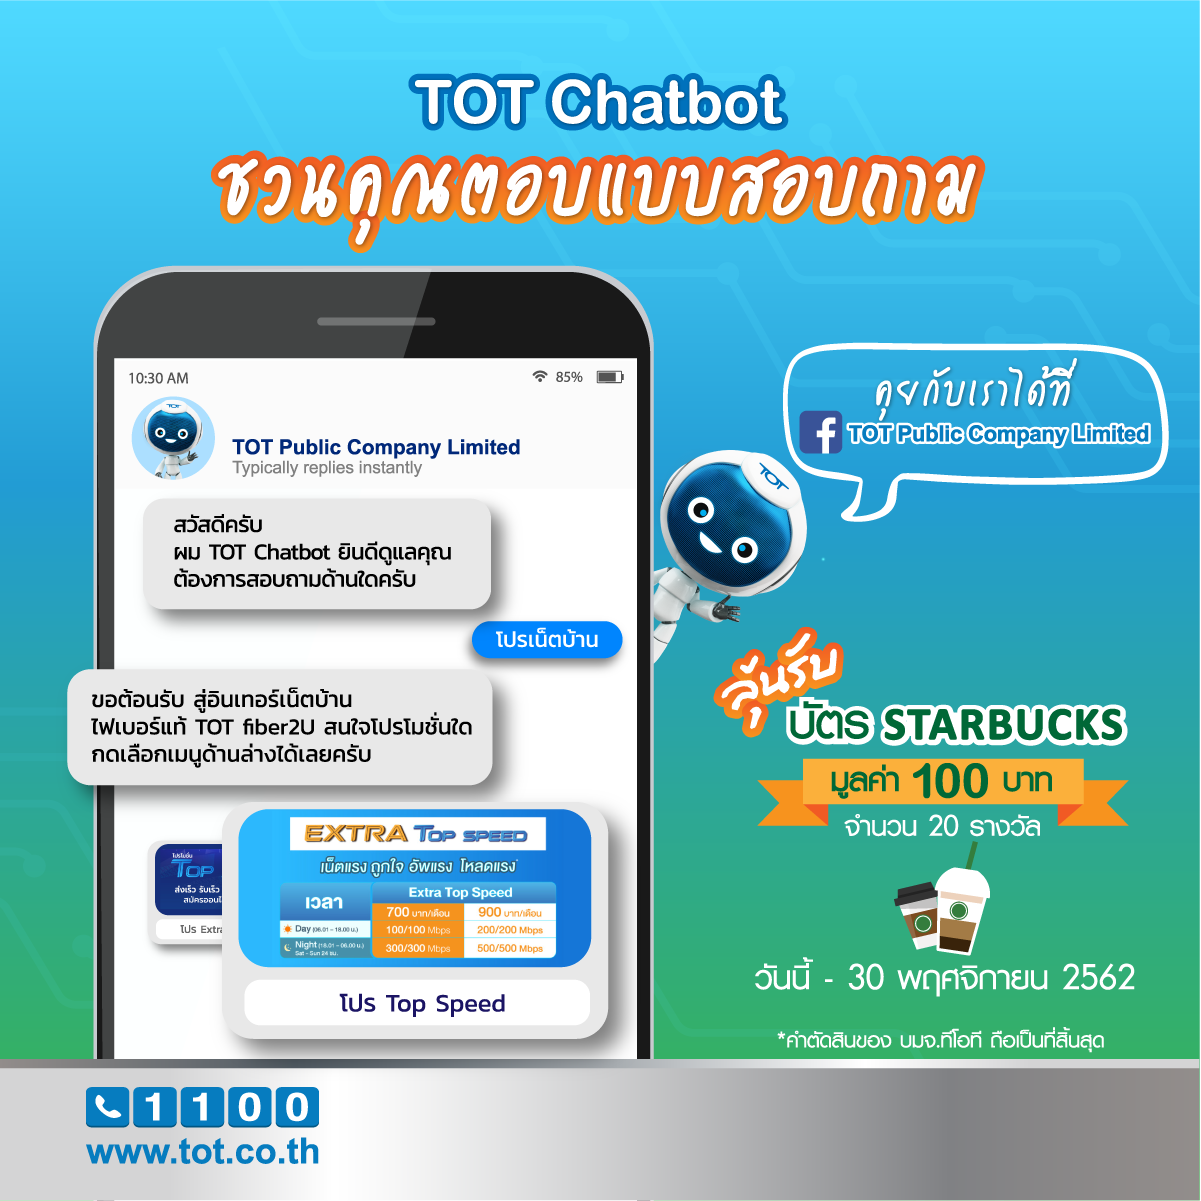 Content_News_TOT Chatbot_16-11-62_01